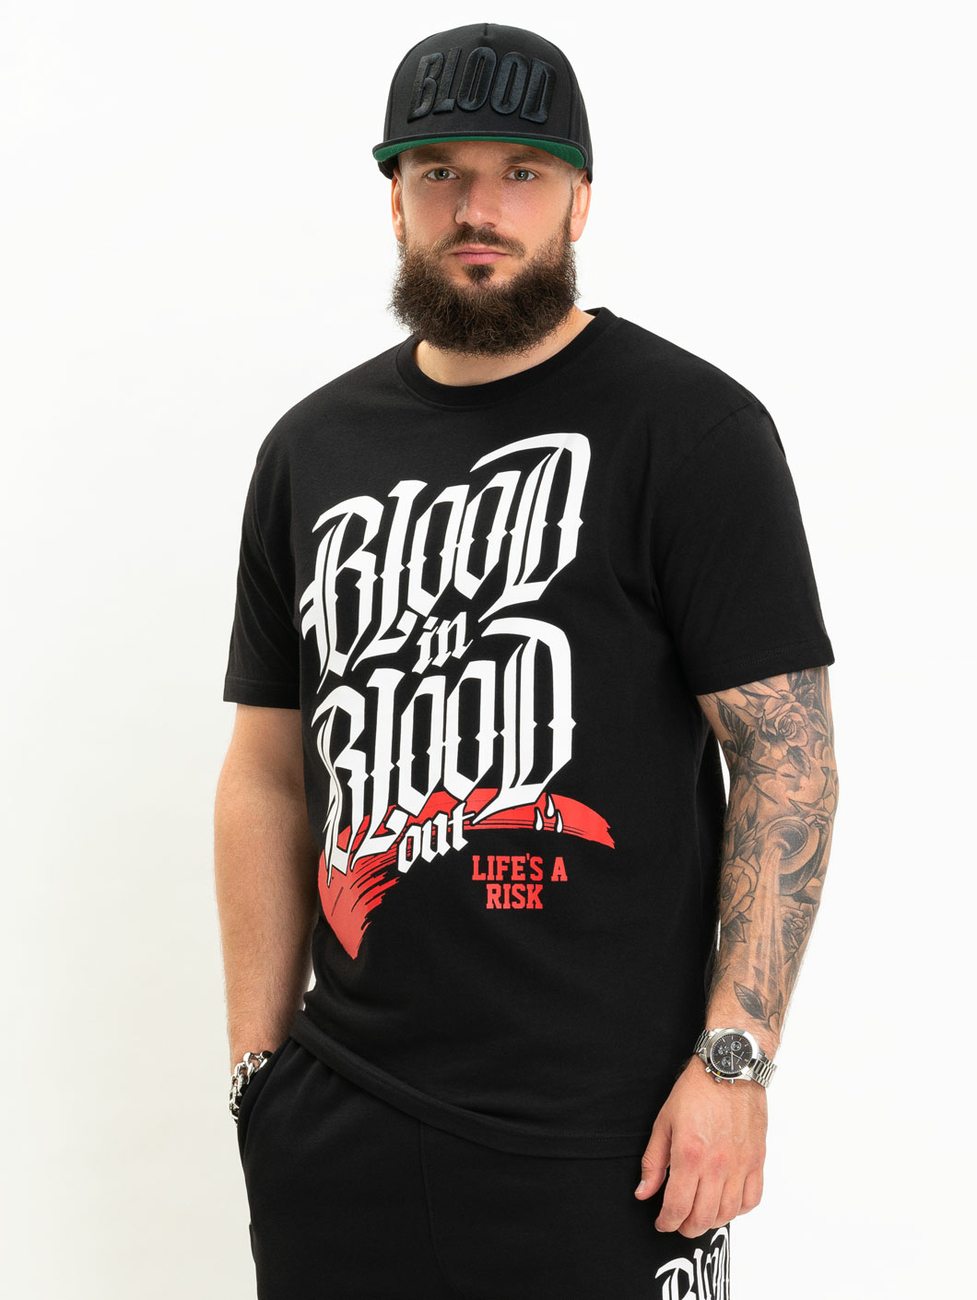 Blood In Blood Out Tranjeros T-Shirt 3XL